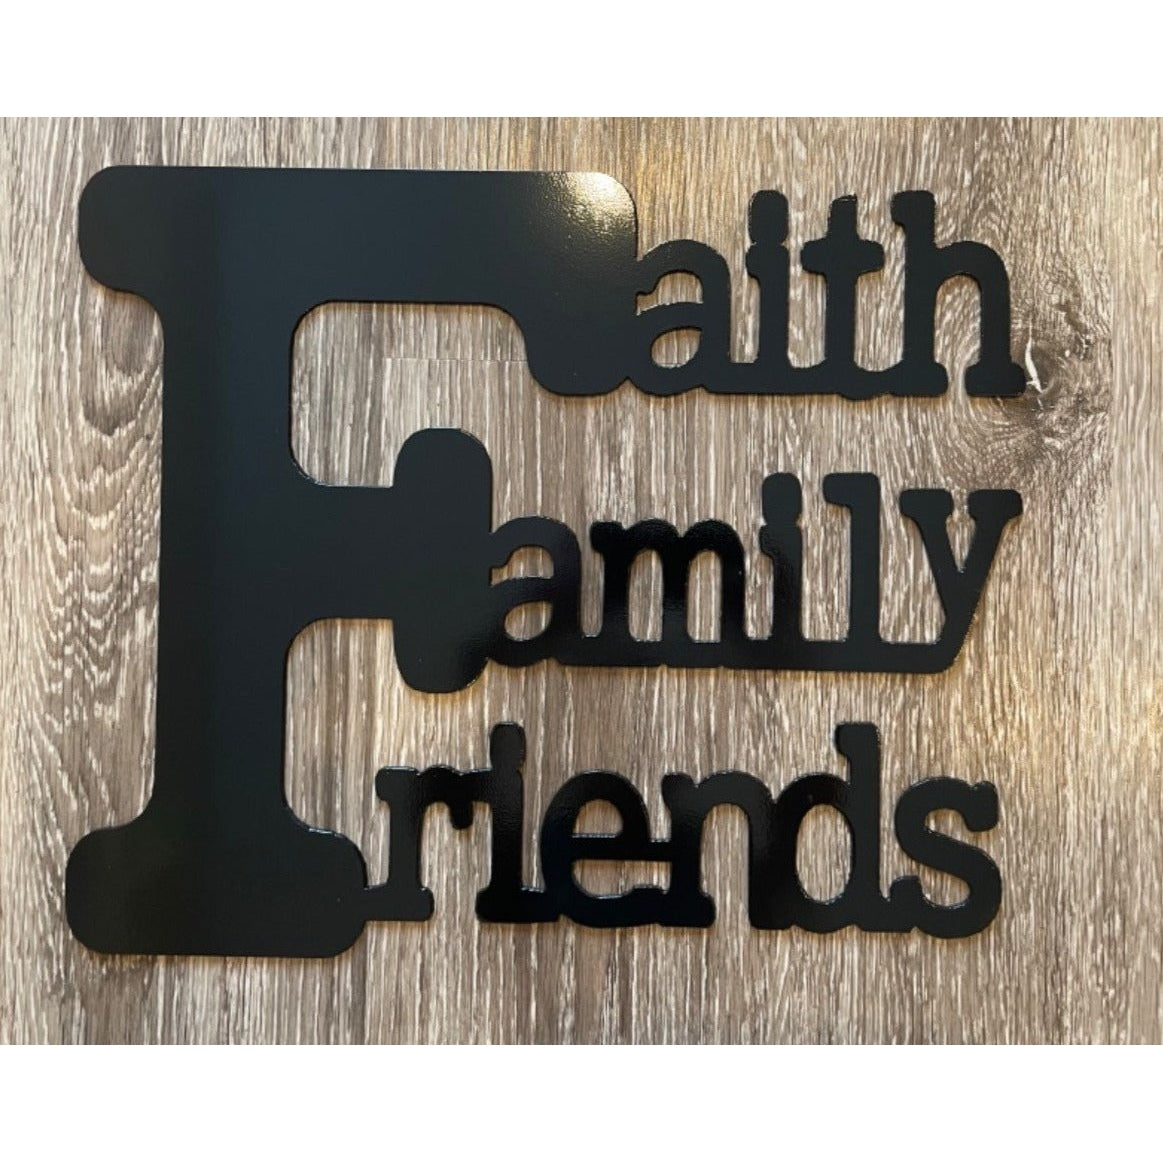 Faith Family Friends Saying-DXFforCNC.com-DXF Files cut ready cnc machines